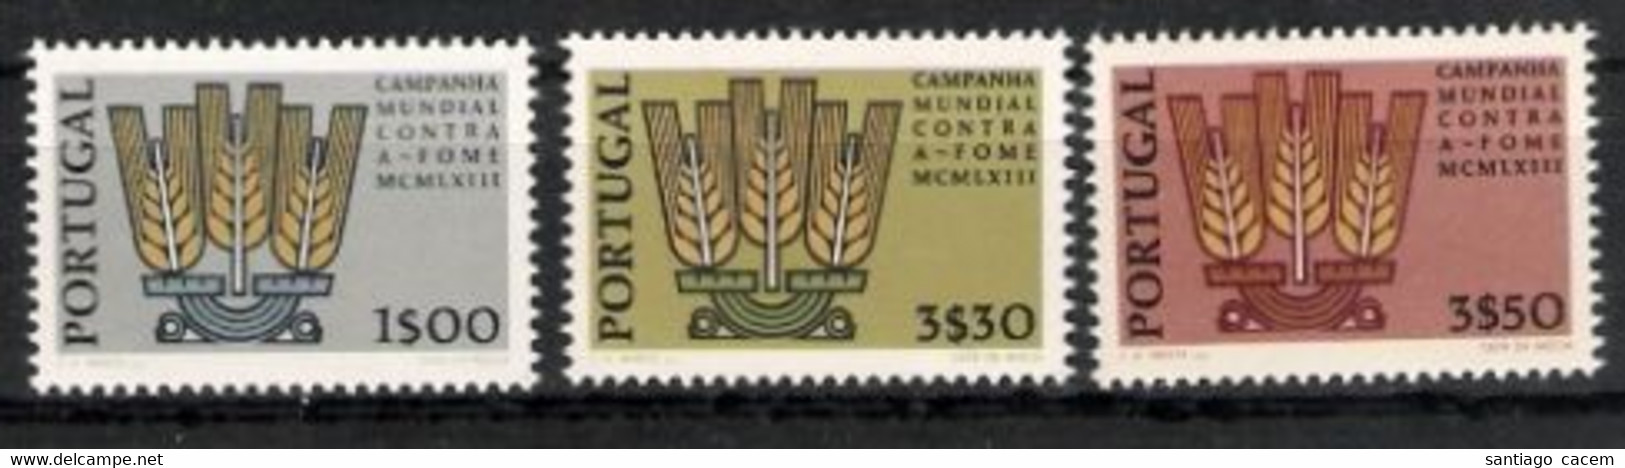 Portugal - 1963 Campanha Mundial Contra Fome** - Unused Stamps